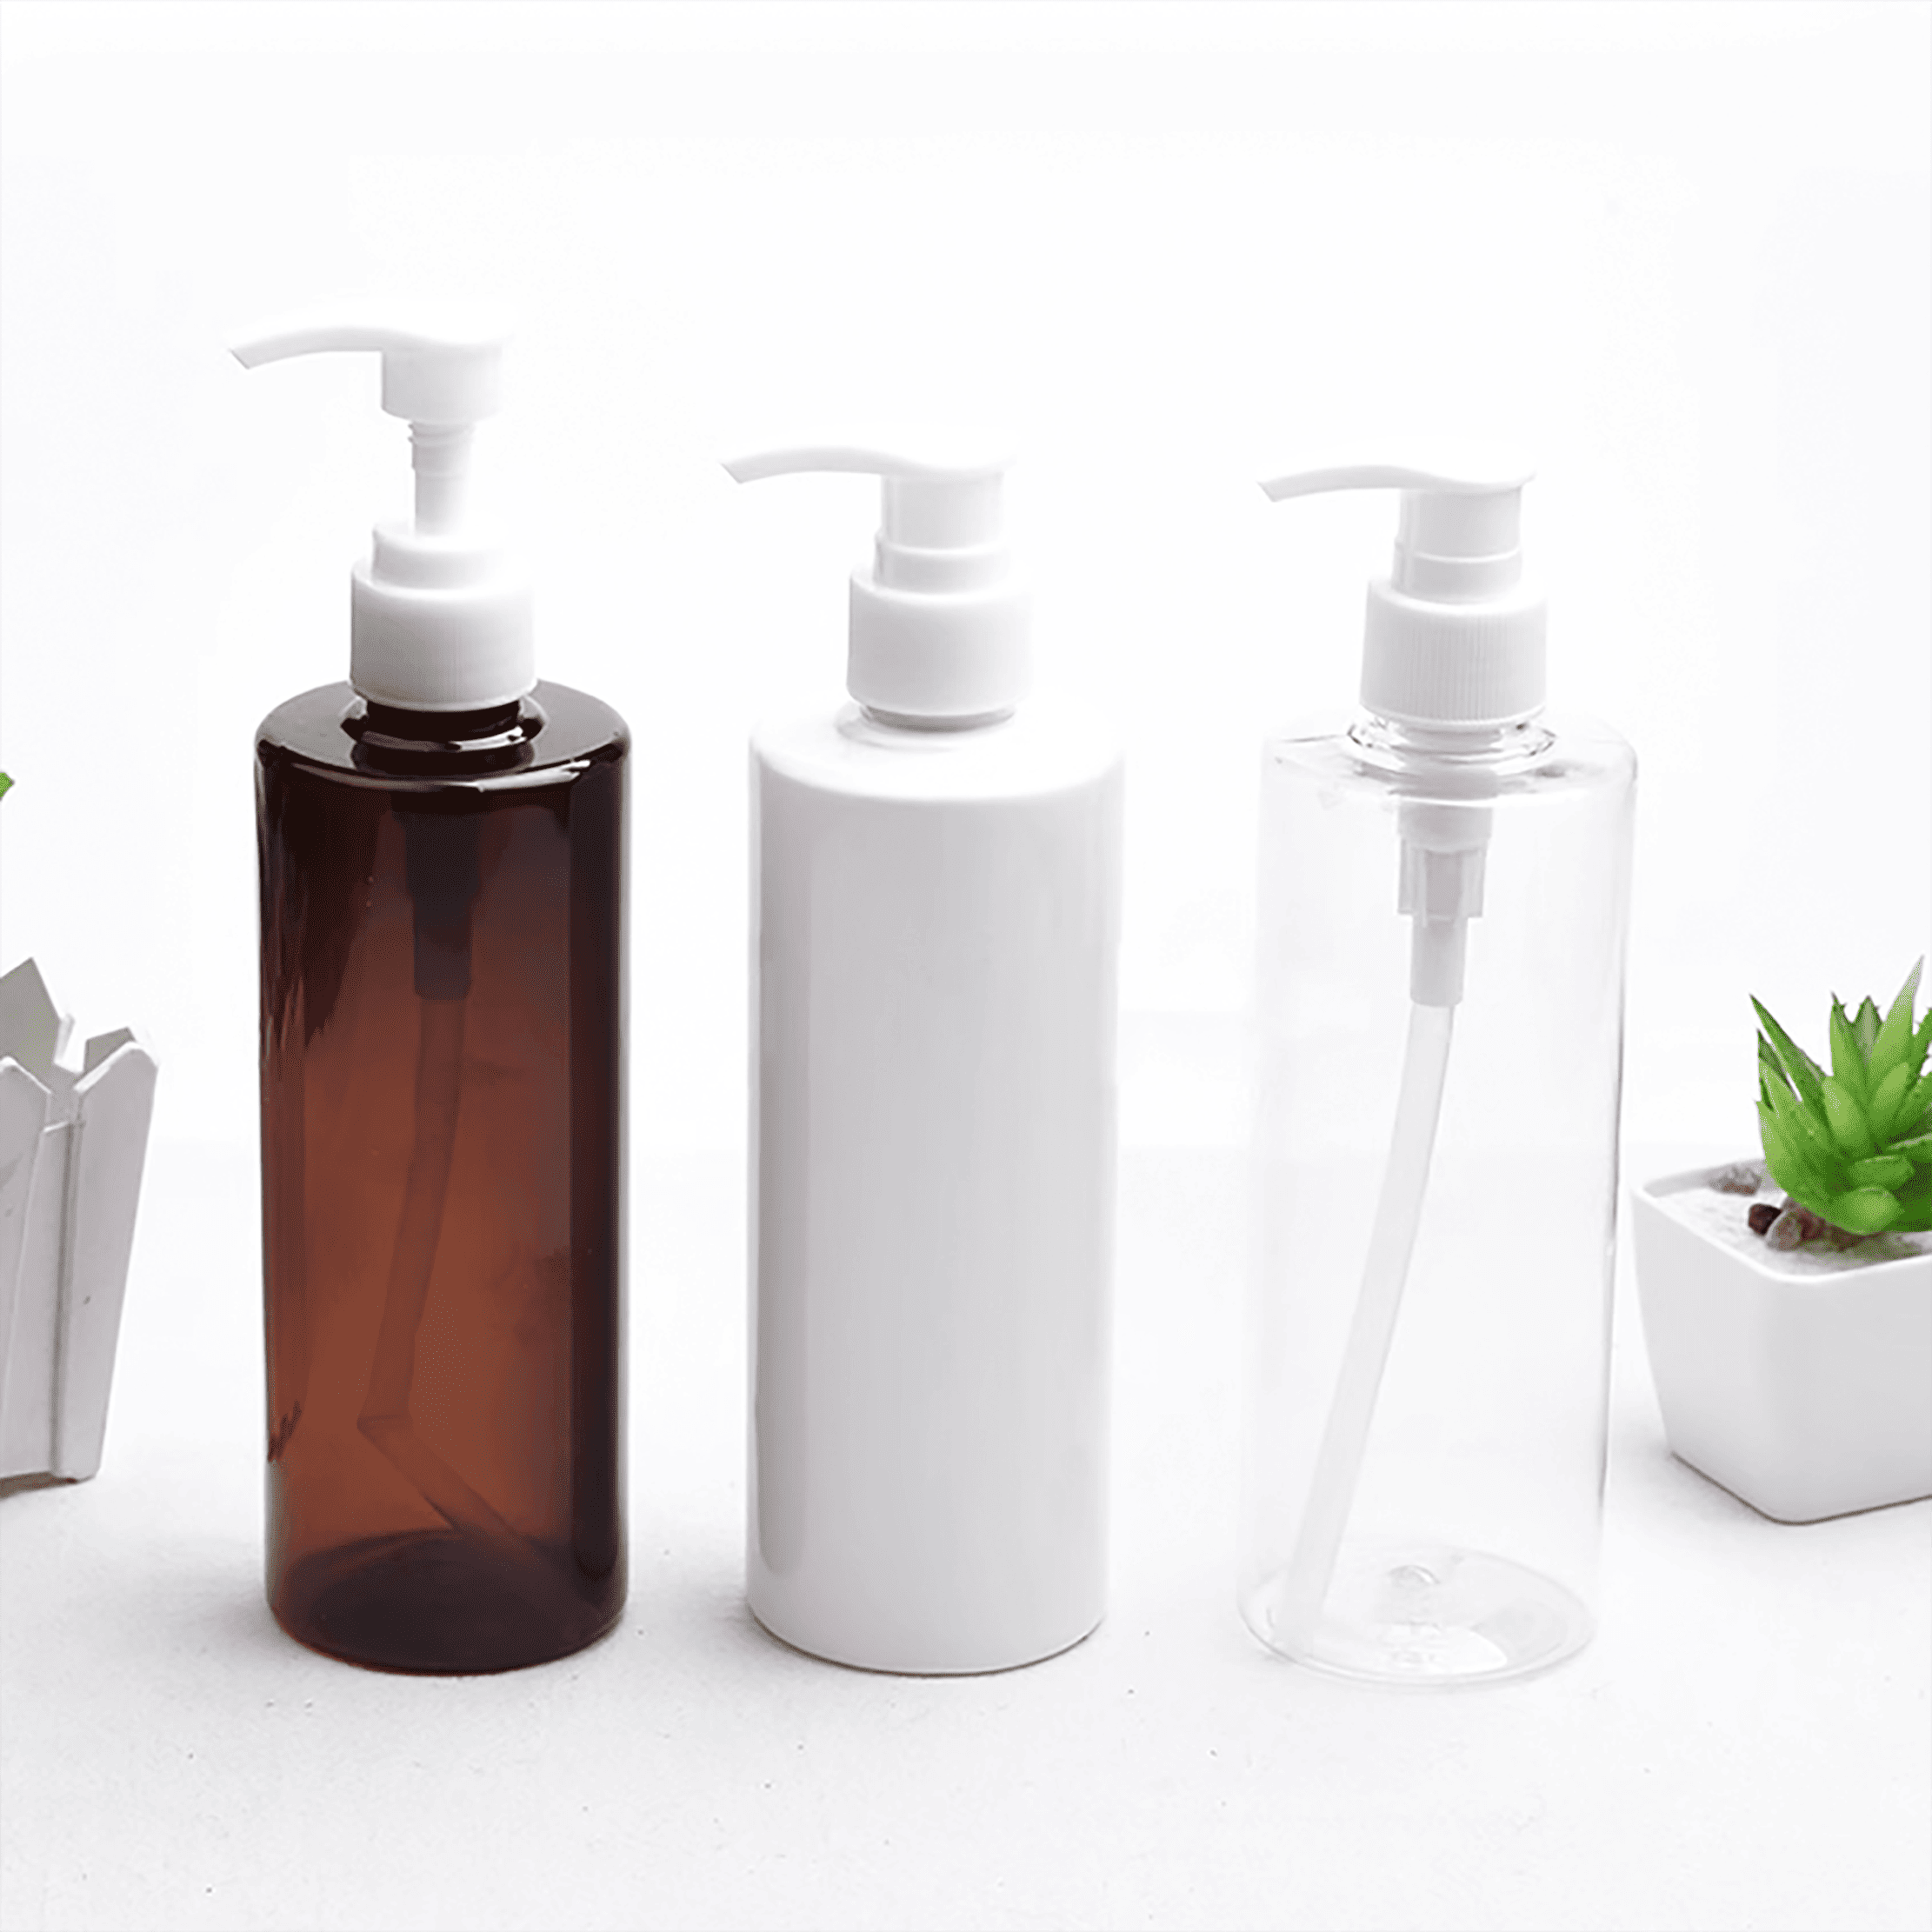 Shampoo & Liquid Soap Bottles